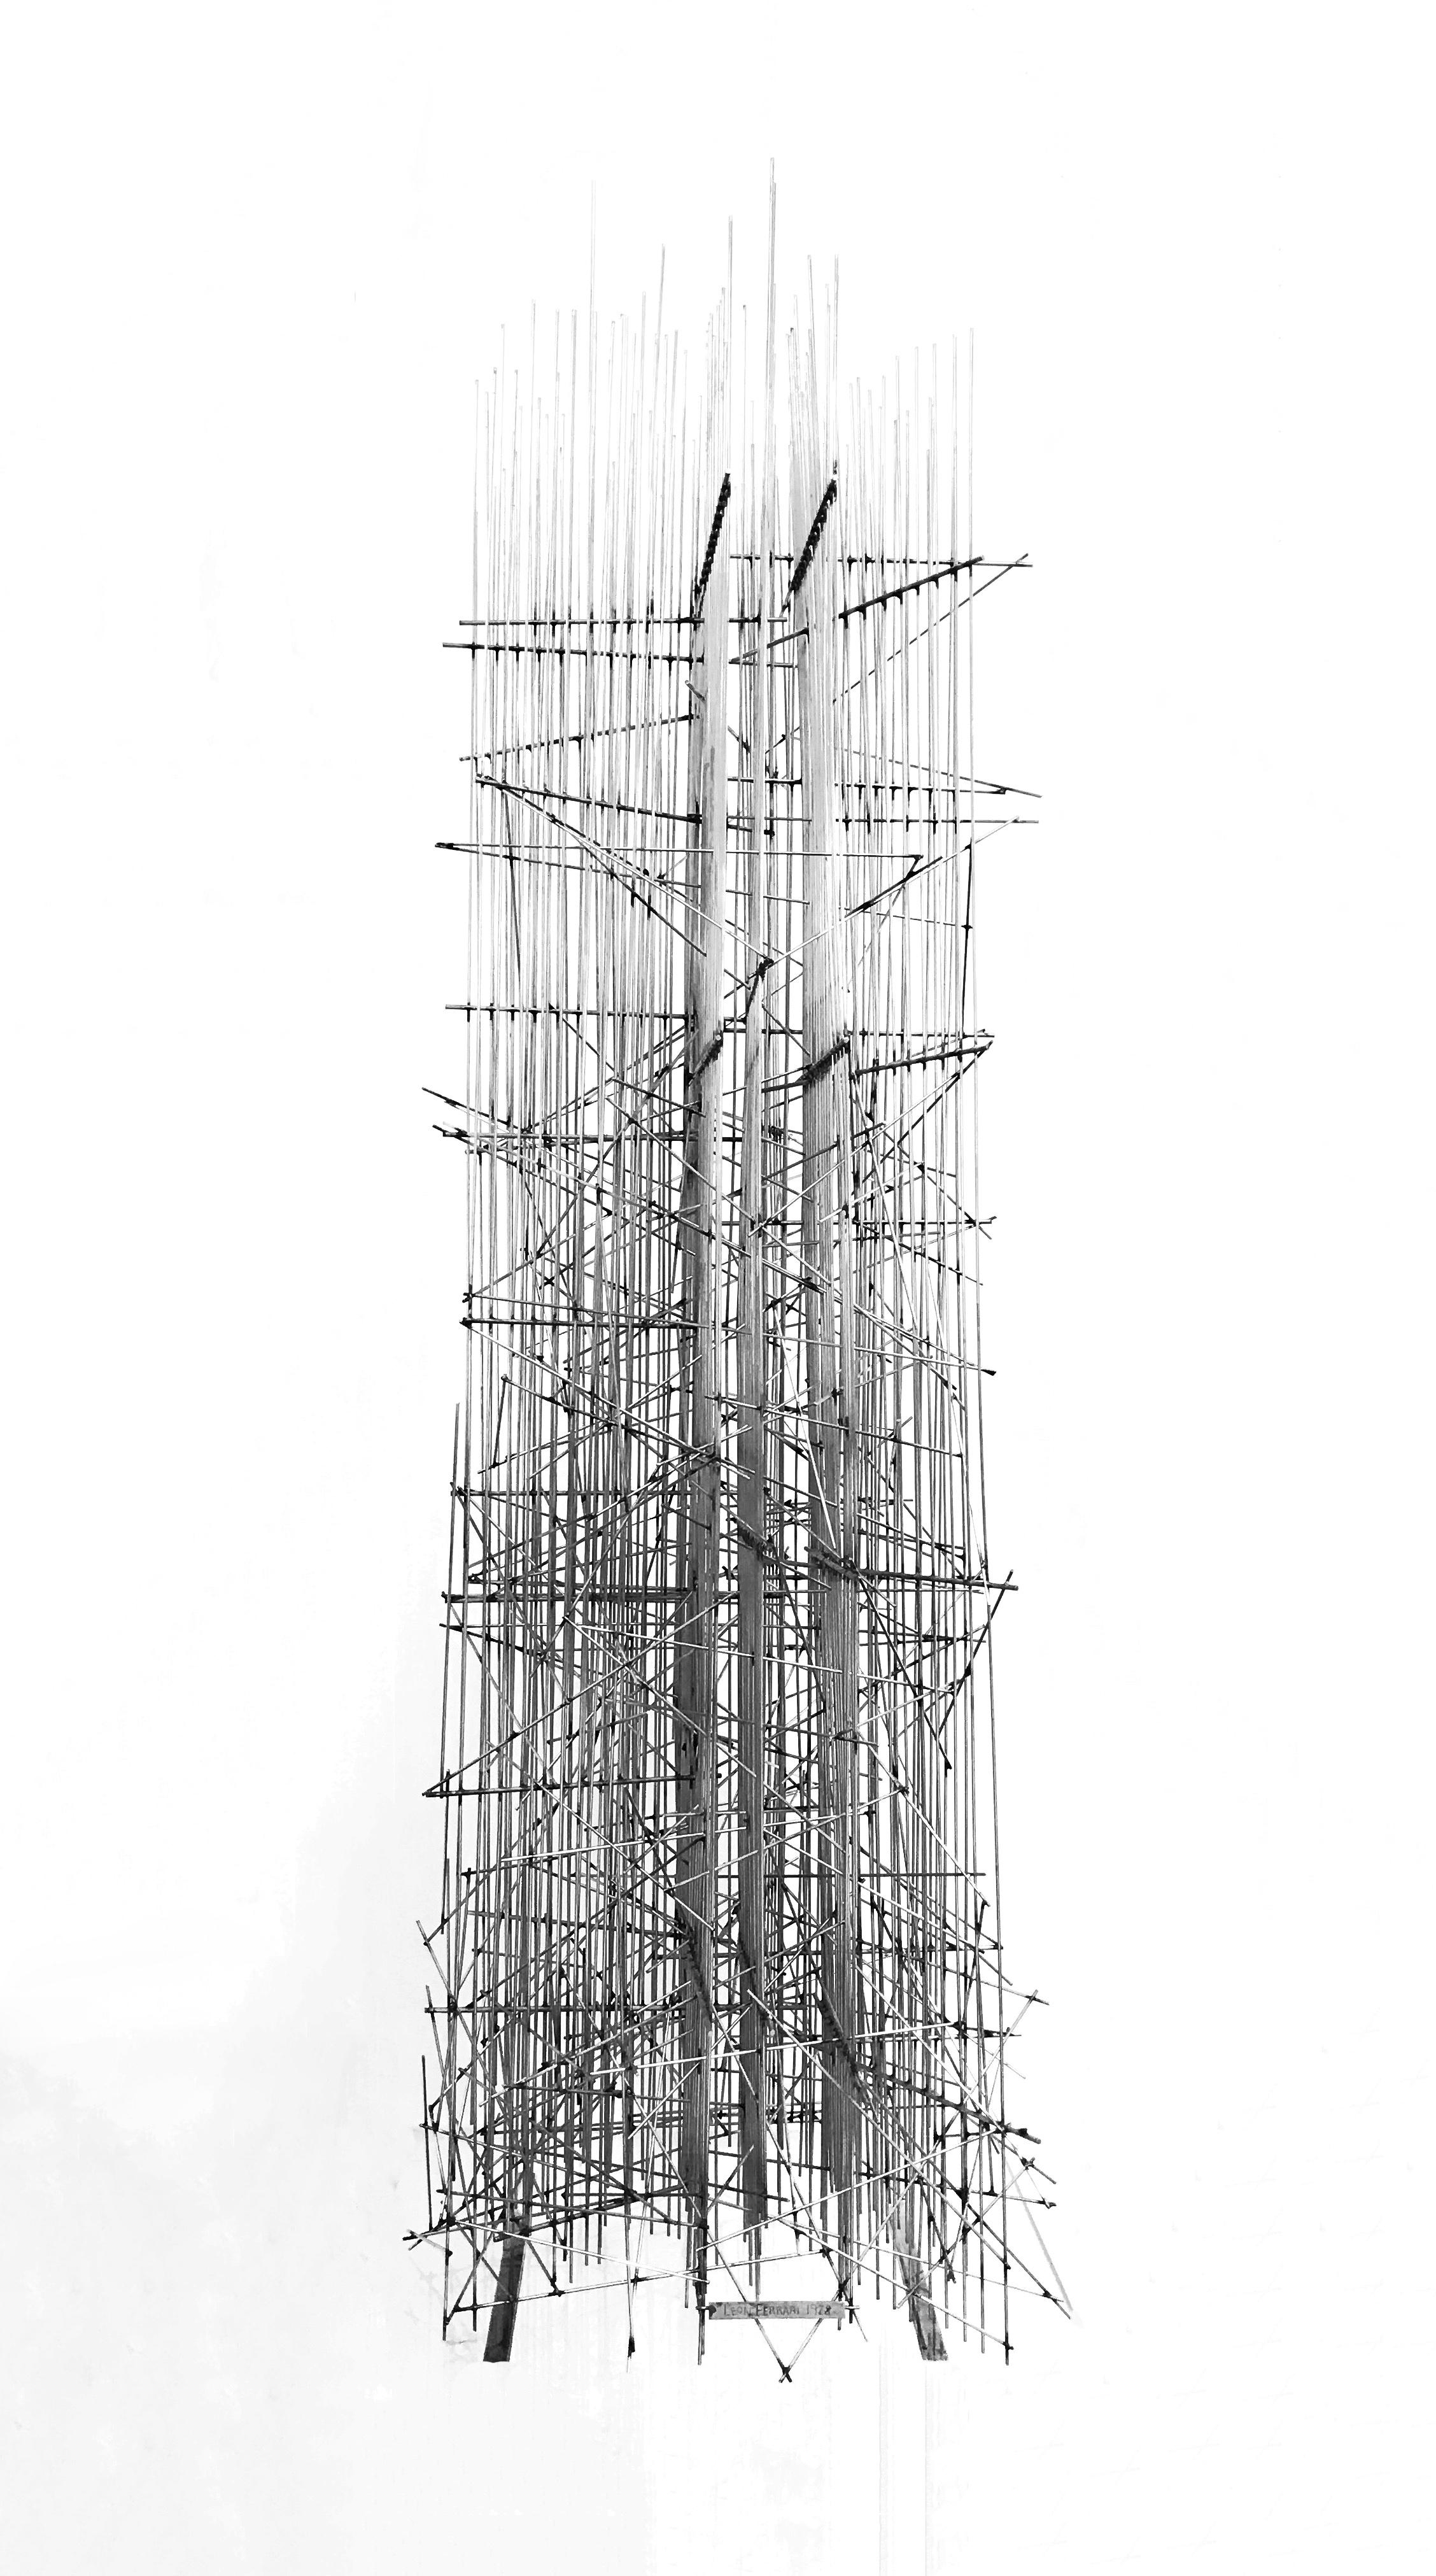 UNTITLED (SCULPTURE) - Sculpture by Leon Ferrari